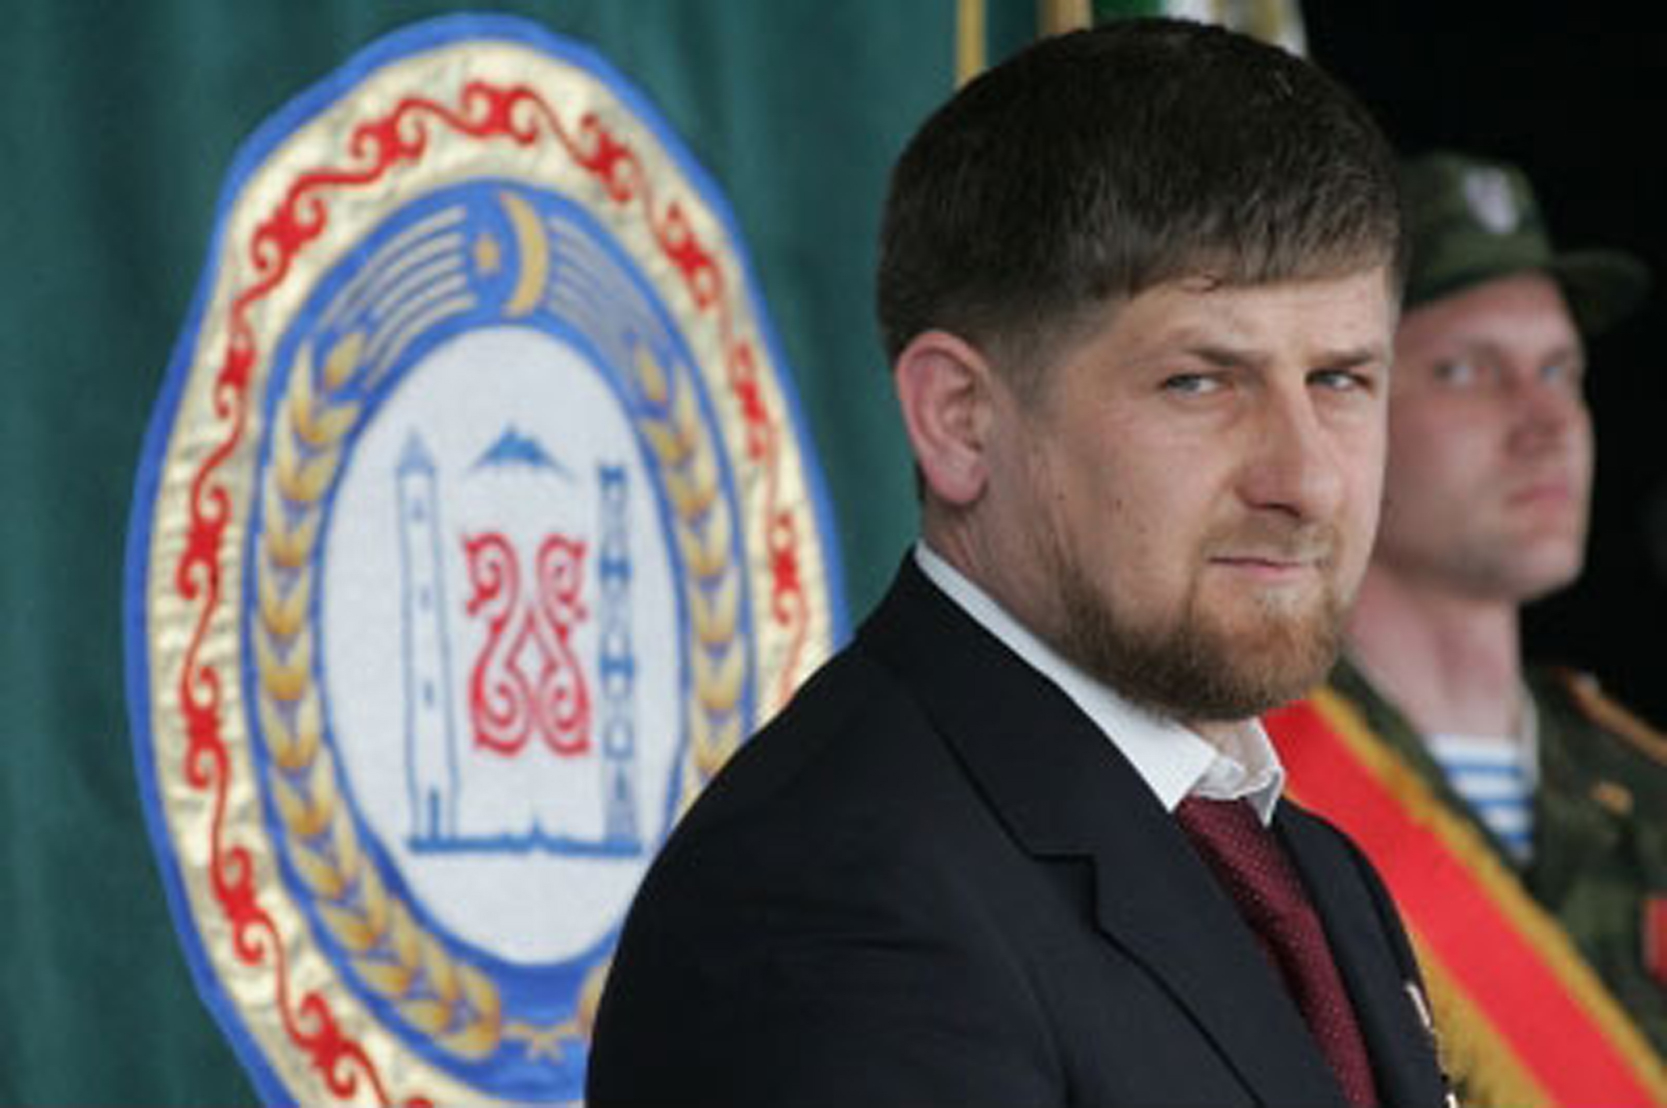 Kadyrov: Anak-anak Gadis Saya Tak Akan Pernah Melepas Jilbabnya di Sekolah